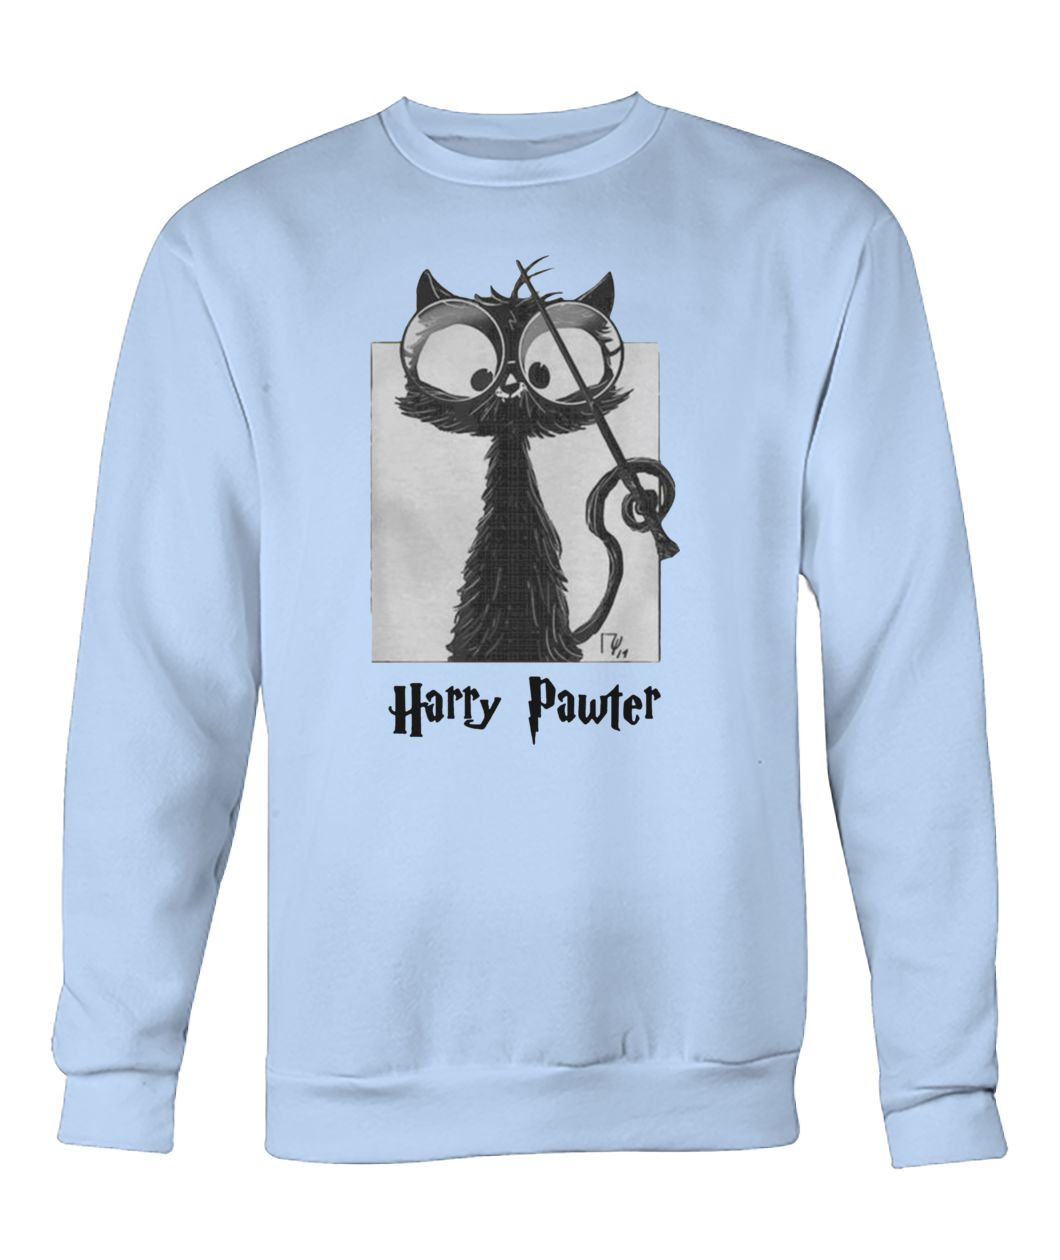 Harry potter harry pawter crew neck sweatshirt